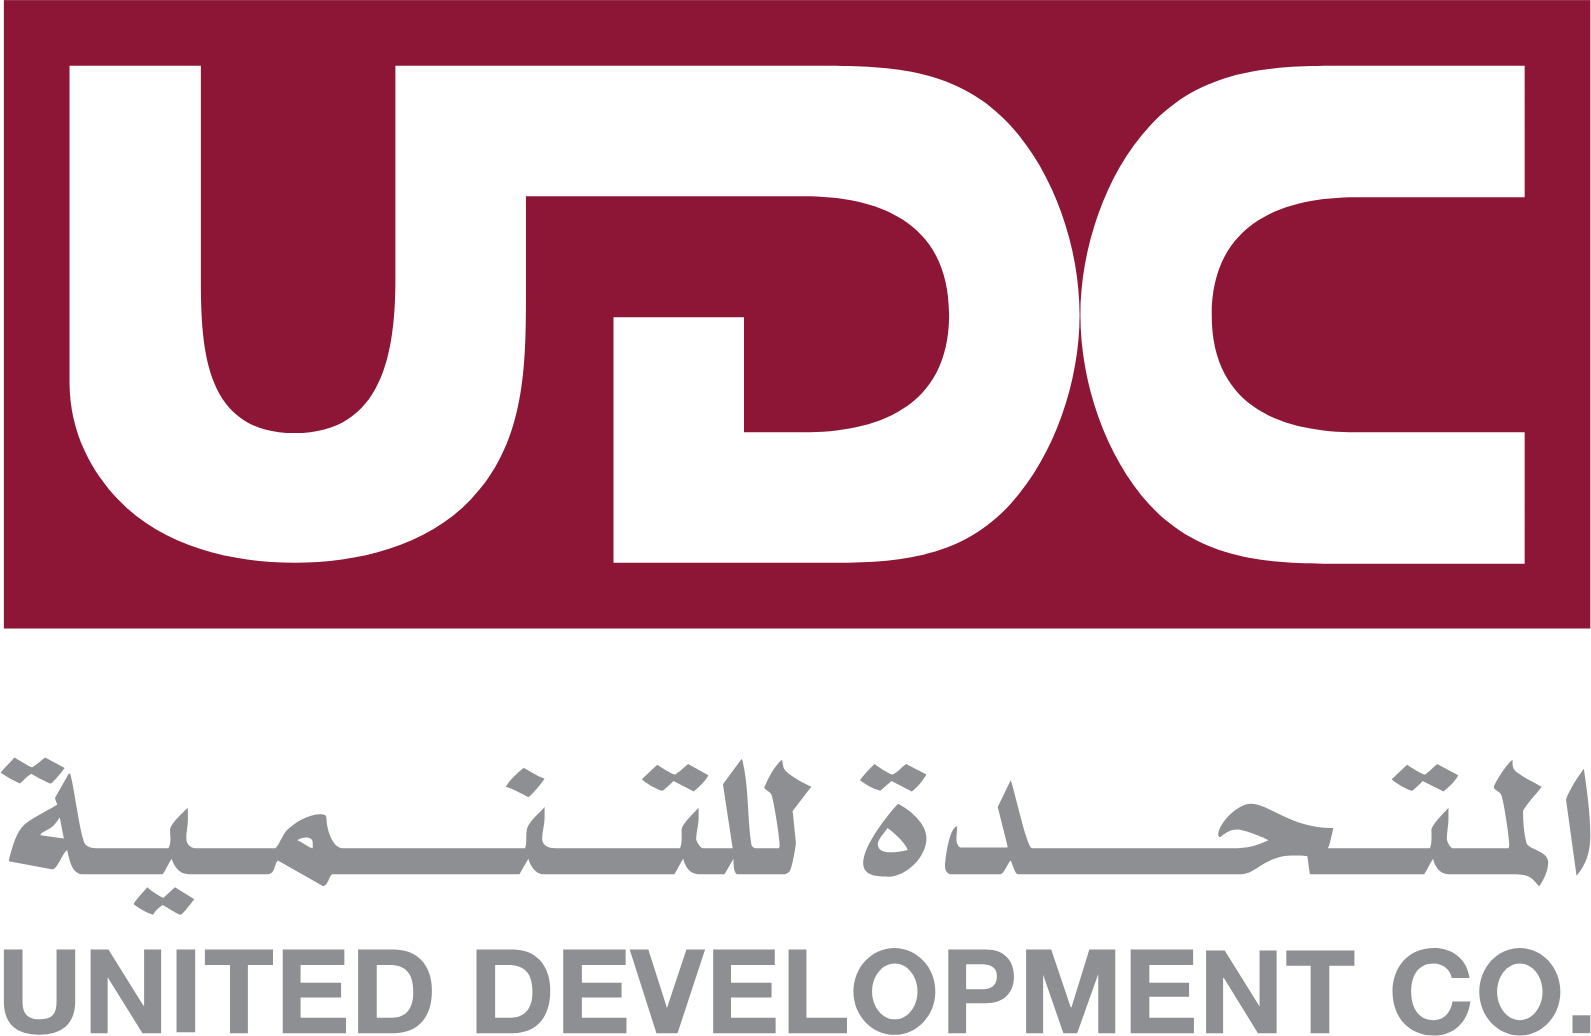 United Development Company logo large (transparent PNG)